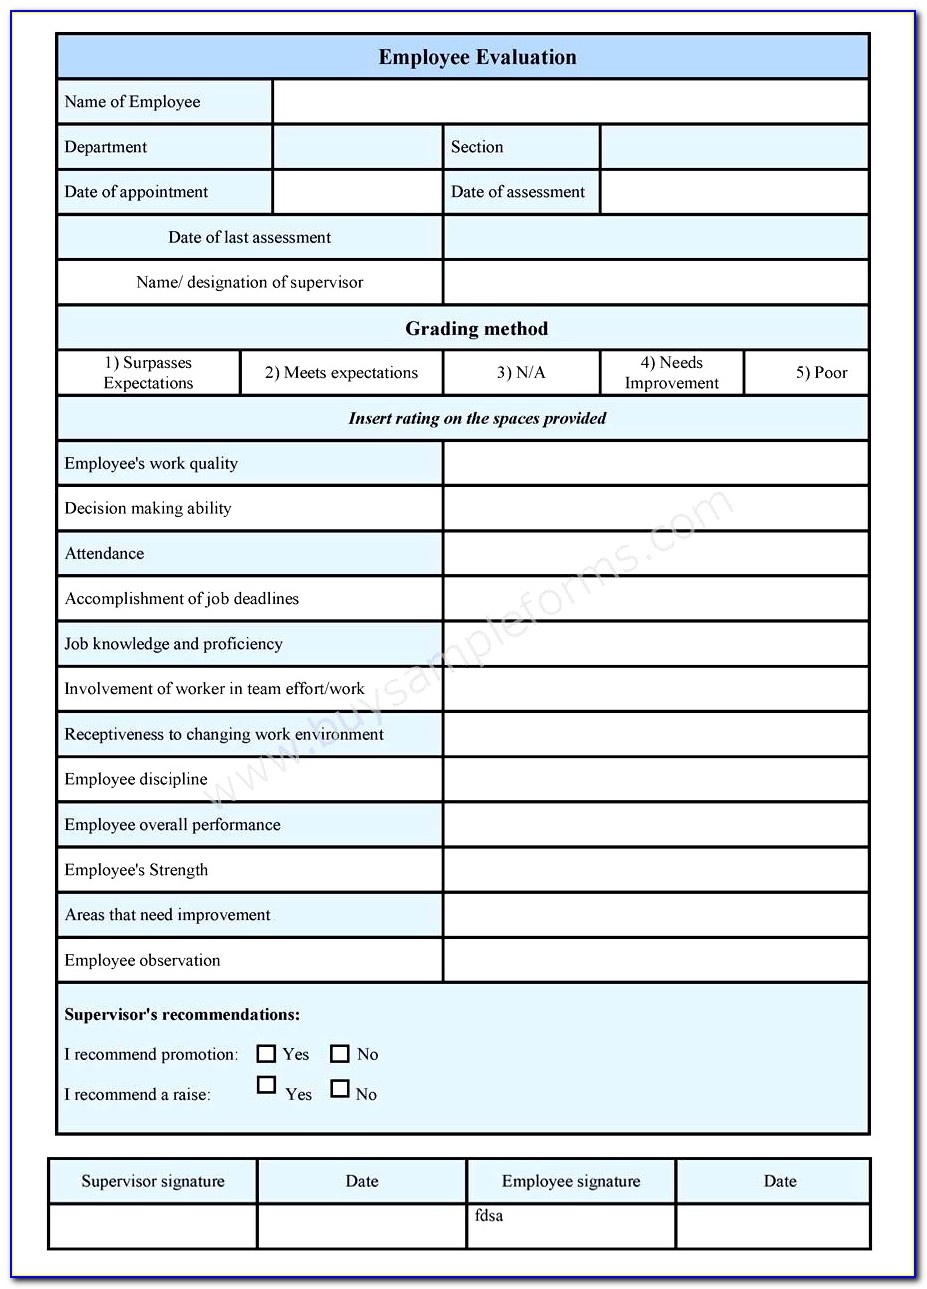 Free Employee Self Evaluation Forms Printable - Form : Resume - Free Employee Self Evaluation Forms Printable